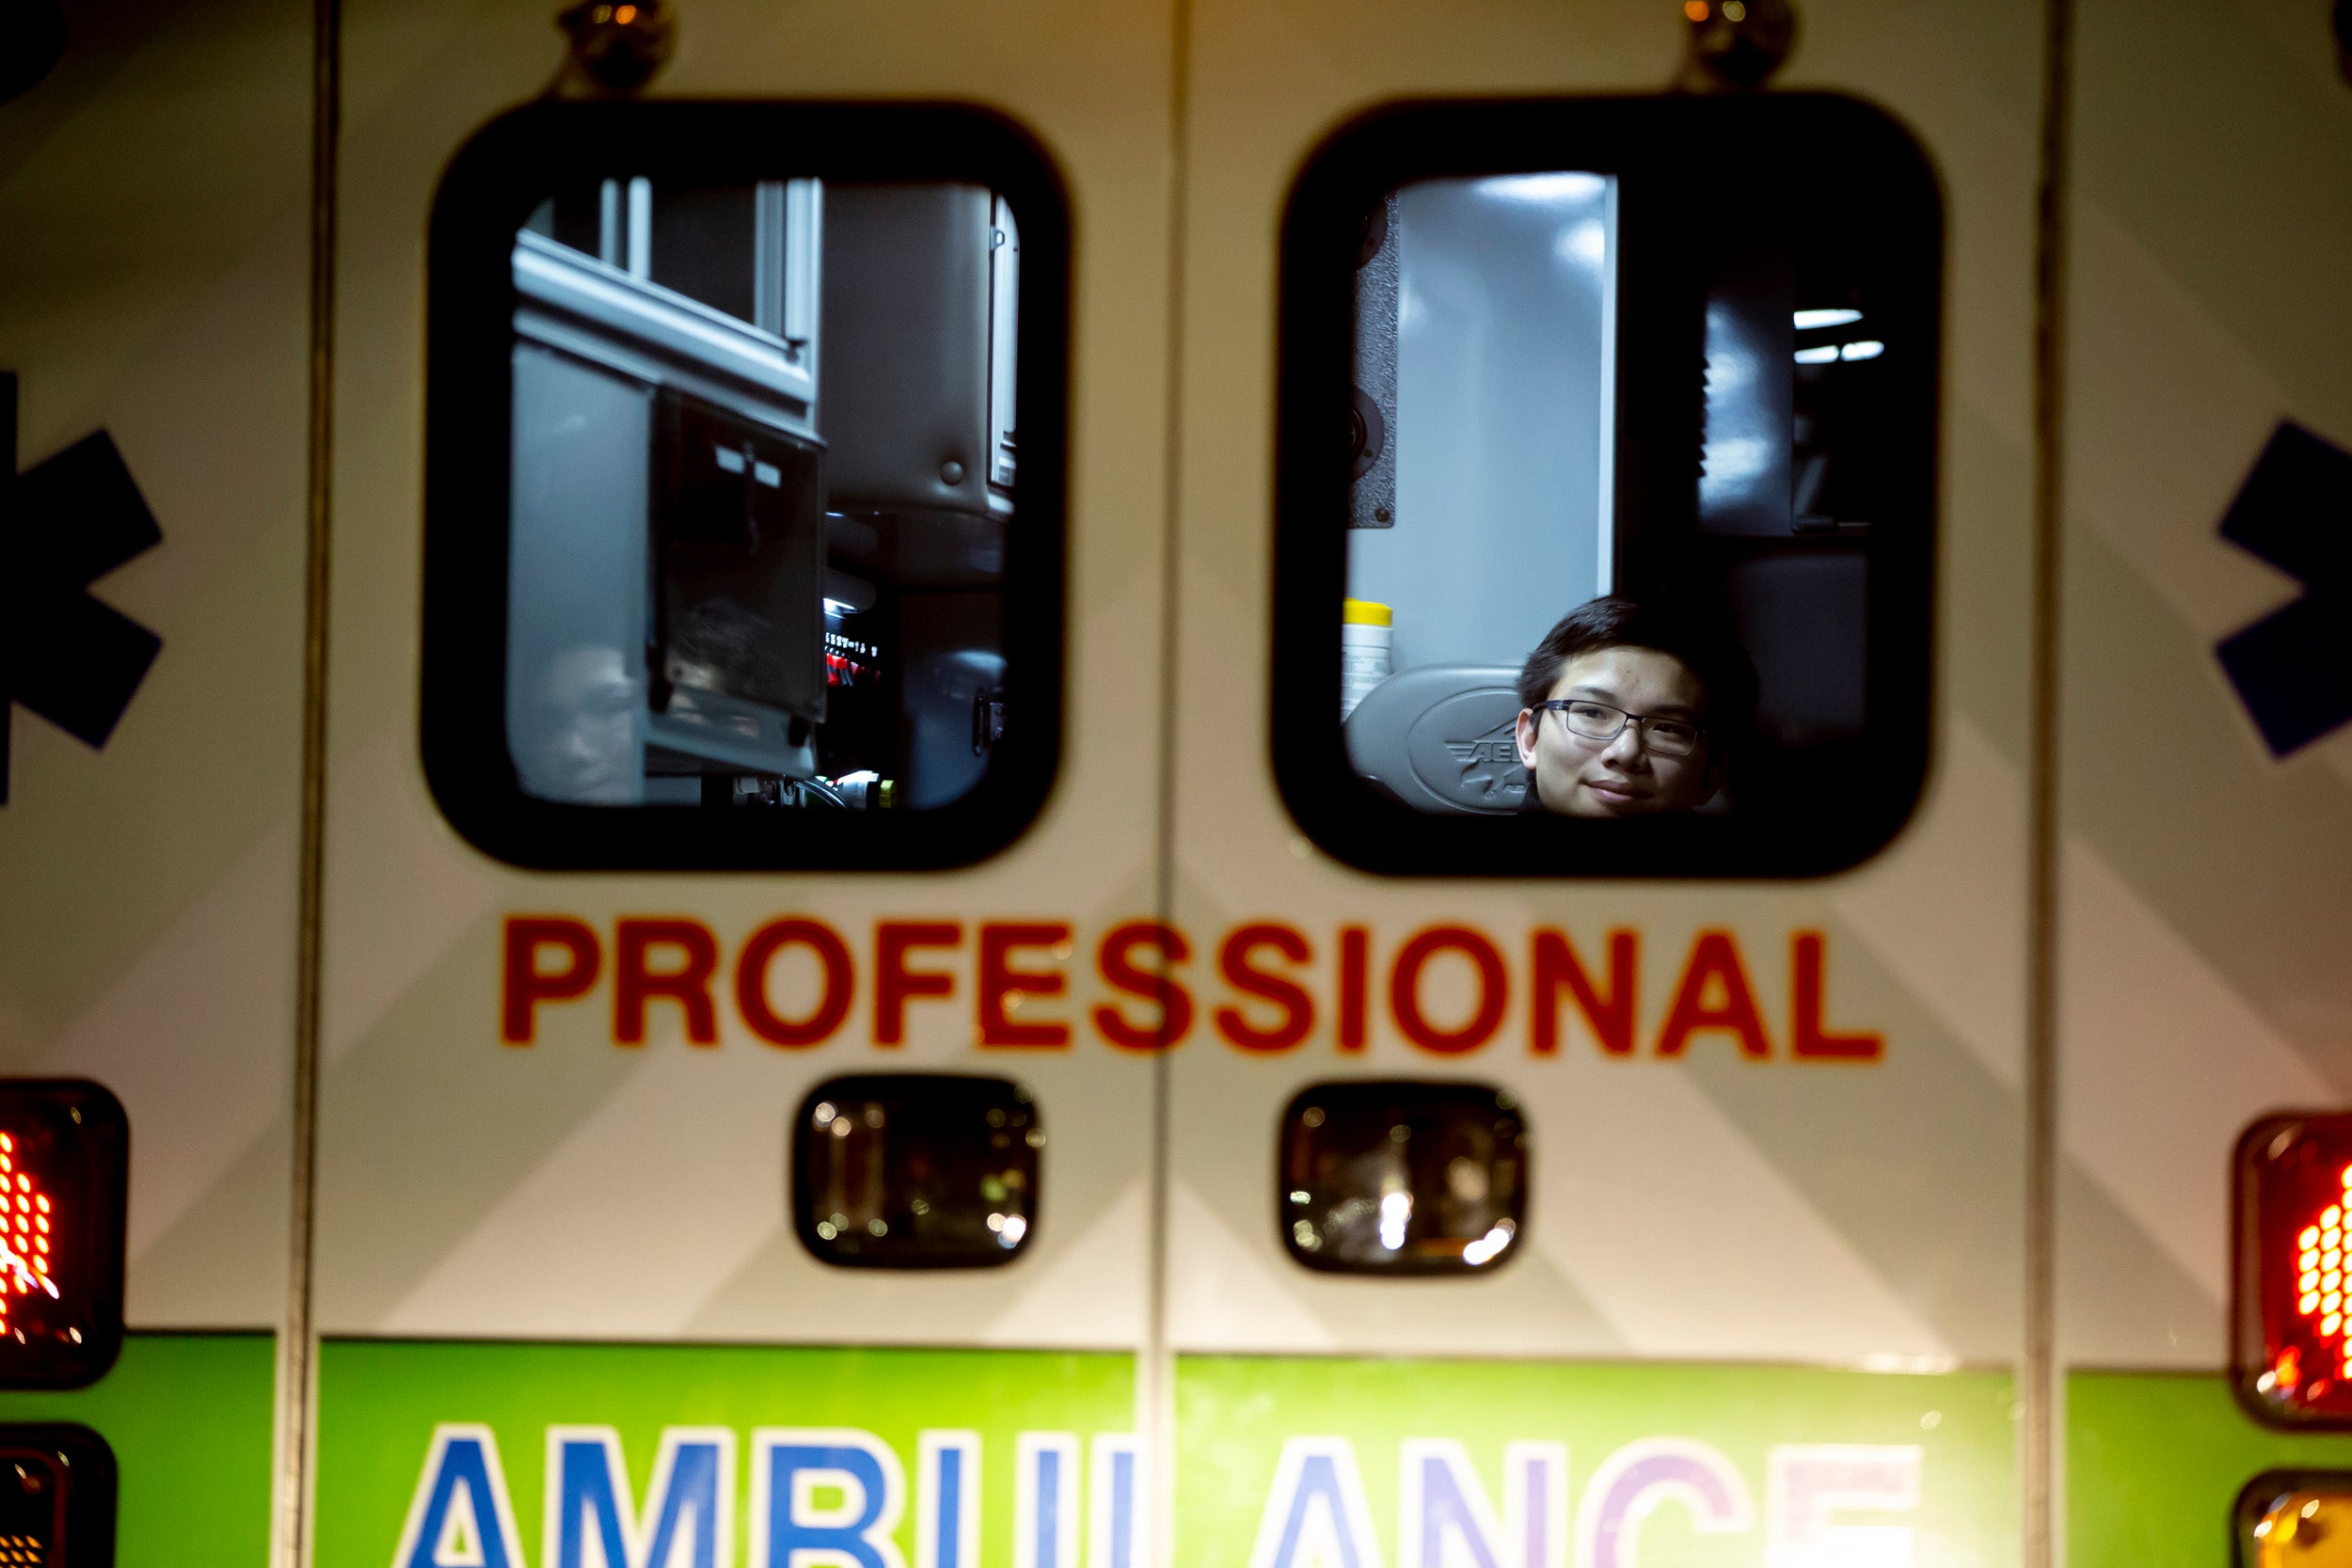 Benjamin Ho is seen through the back door of an ambulance.